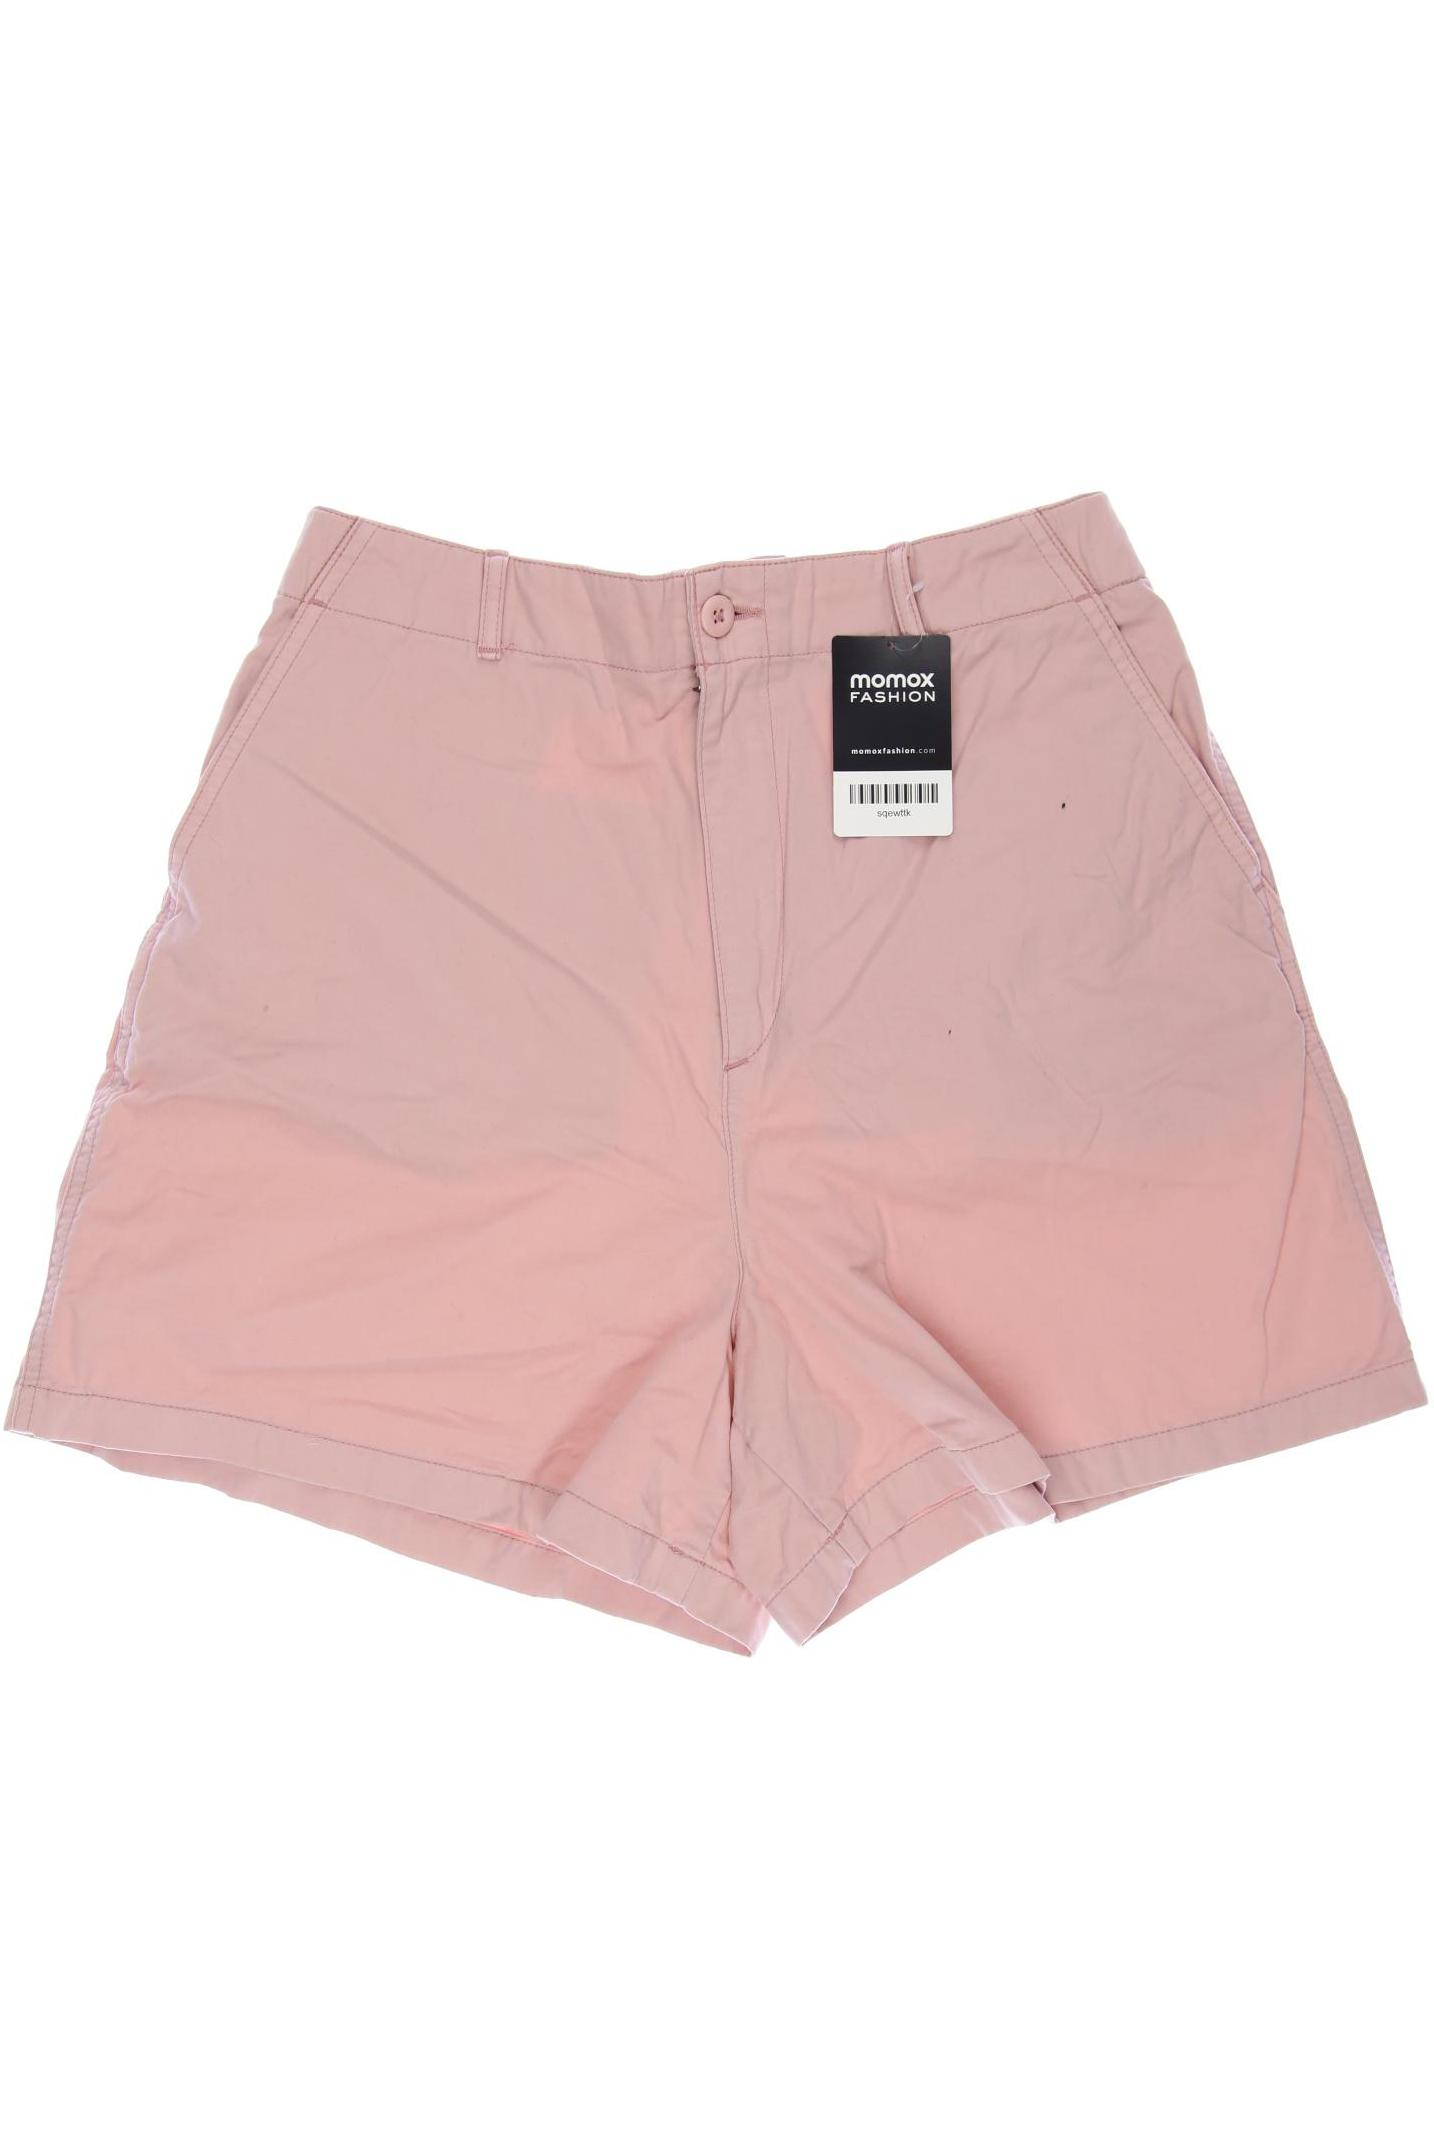 uniqlo Damen Shorts, pink, Gr. 38 von uniqlo